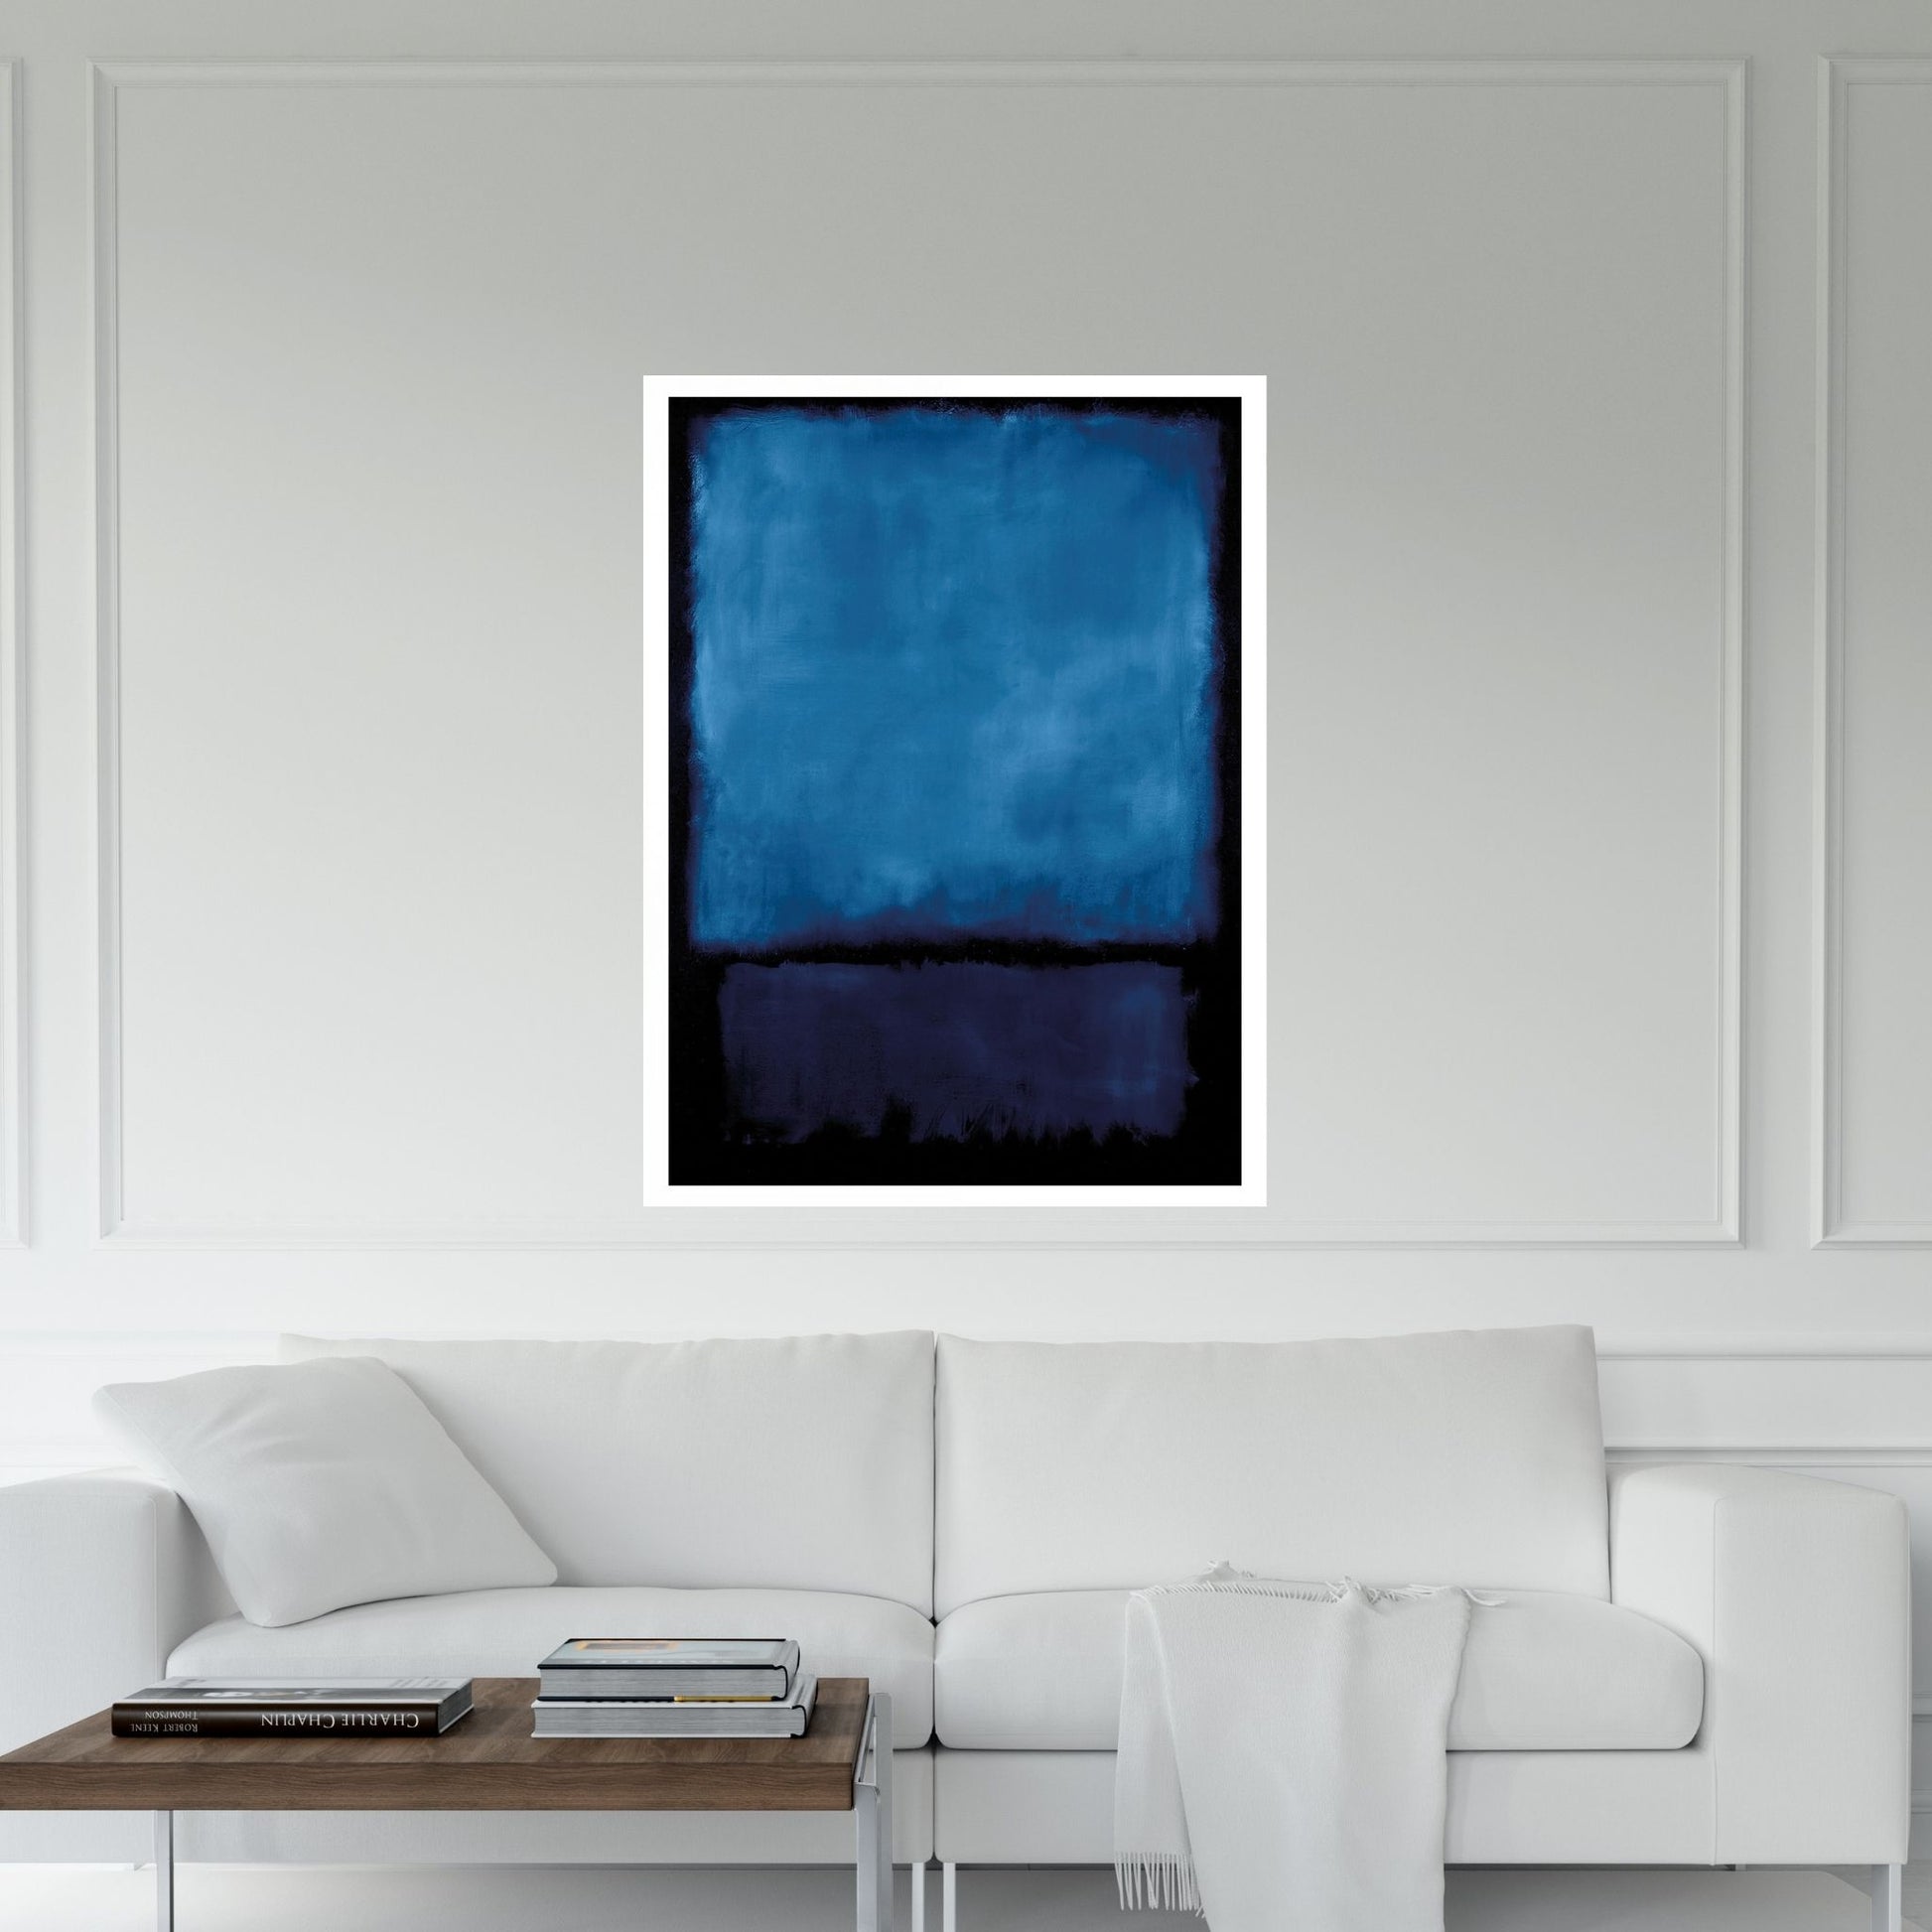 Mark Rothko Canvas Wall Art Print Blue Black YCanvas.com